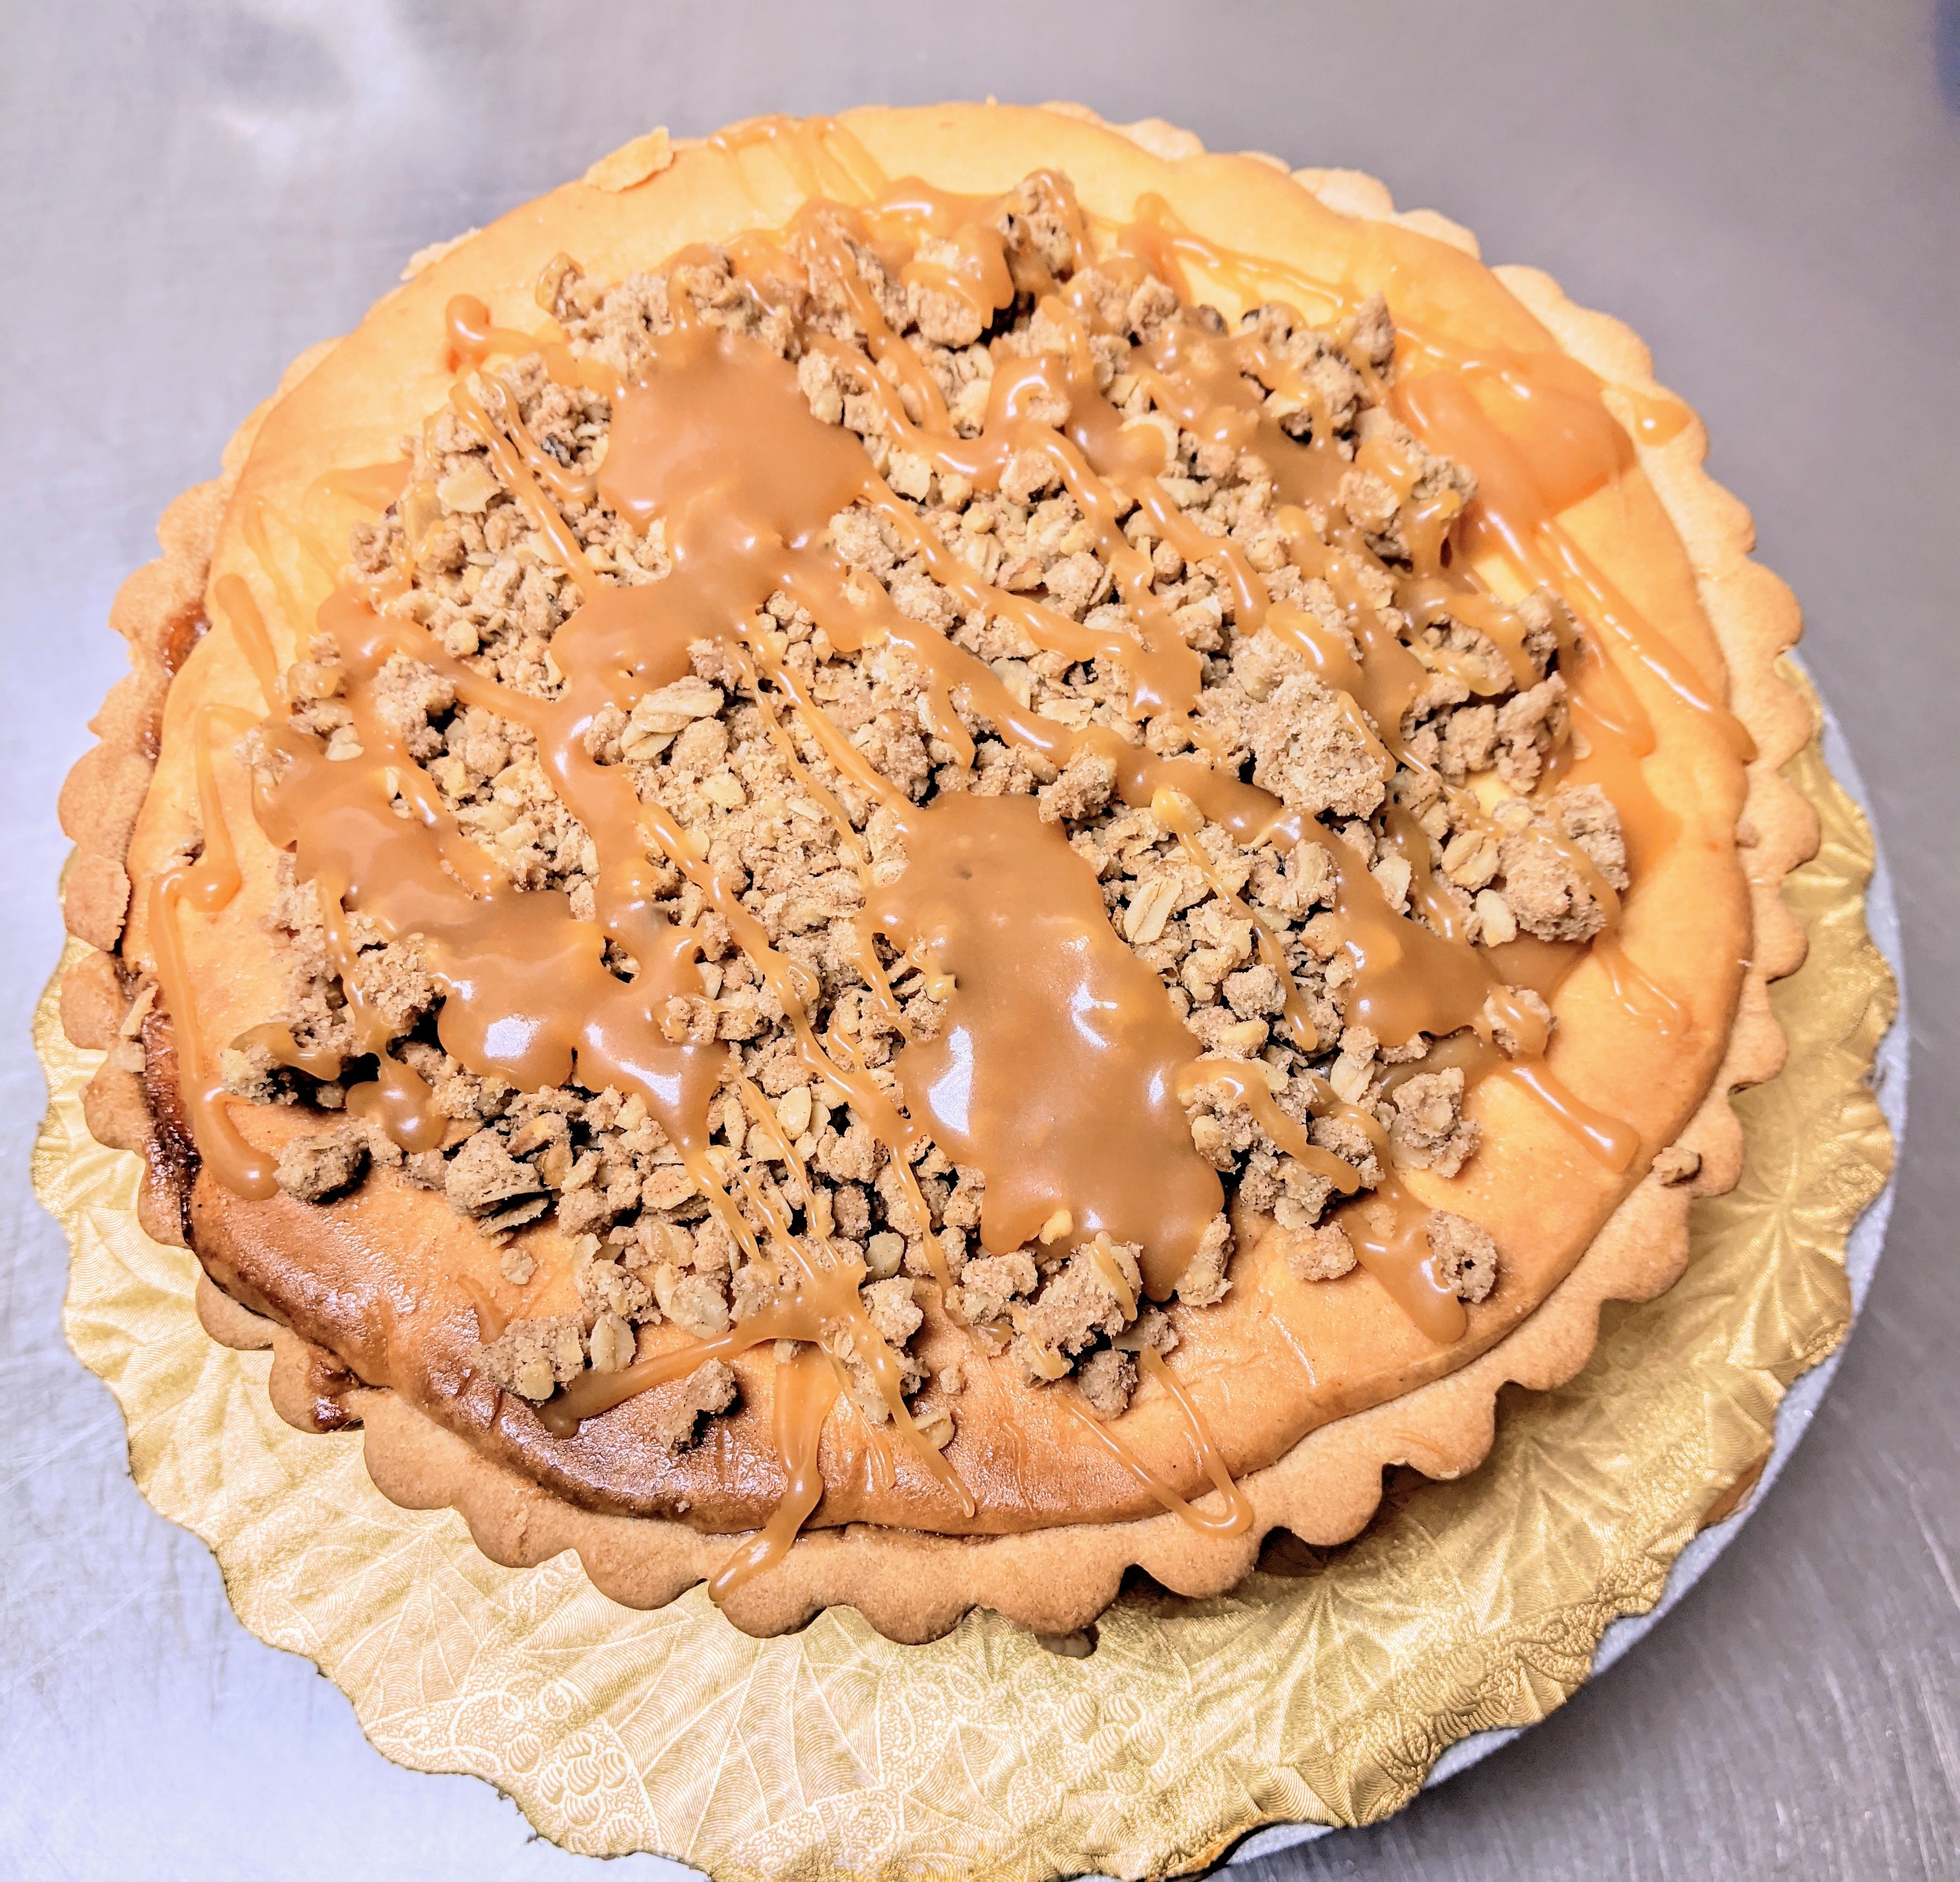 Apple Pie Cheesecake -10 inch